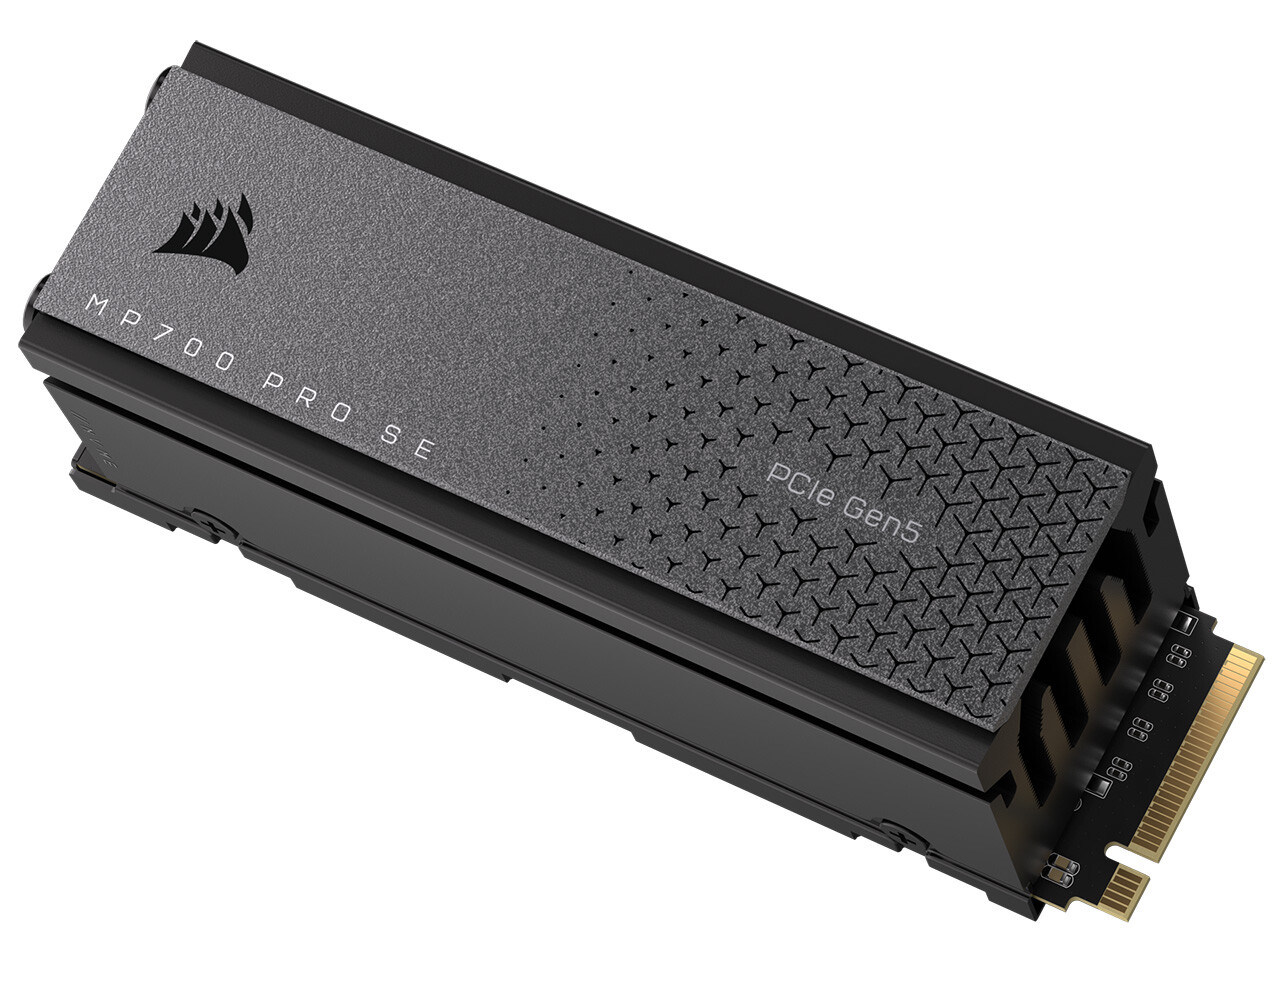 CORSAIR MP700 PRO SE PCIe 5.0 x4 M.2 SSD را معرفی کرد